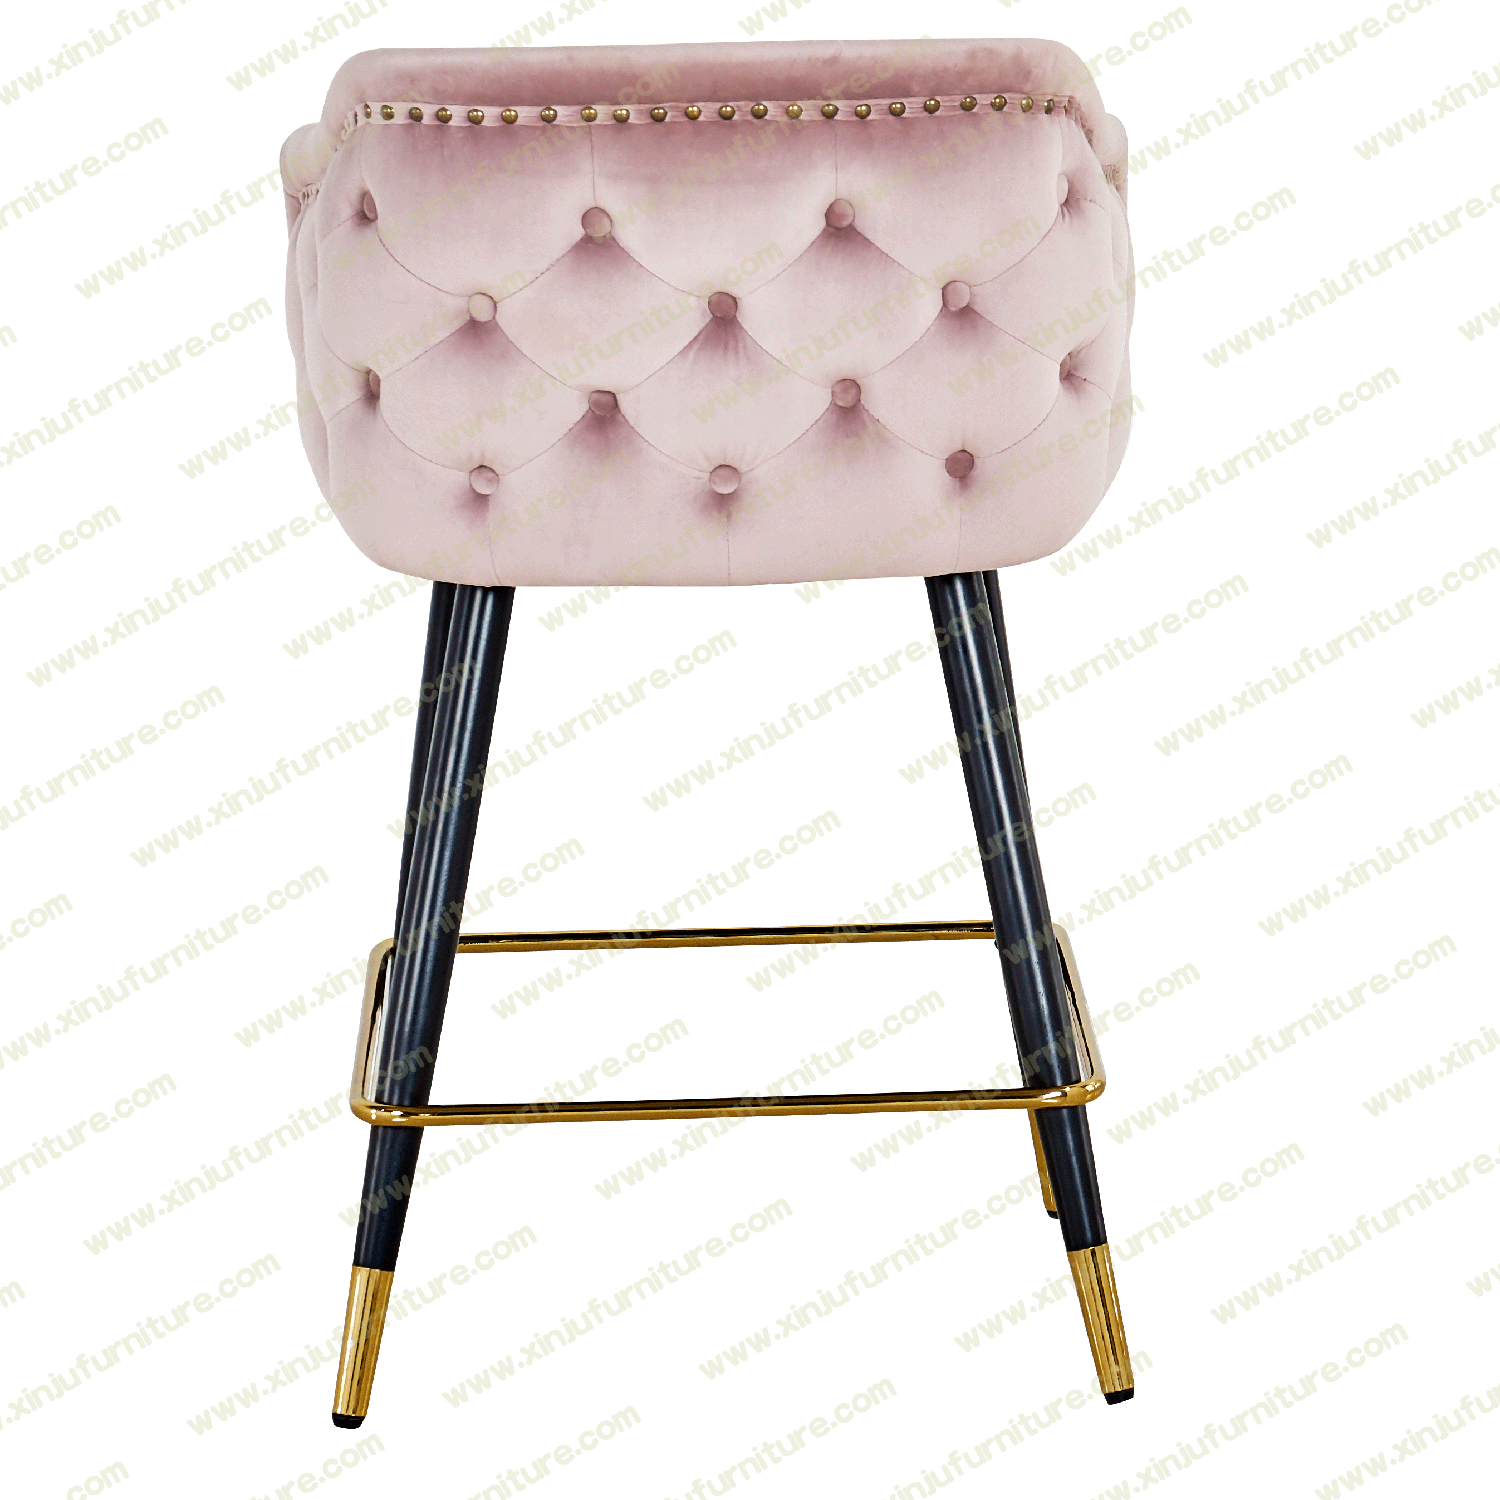 Pink high-end bar chair